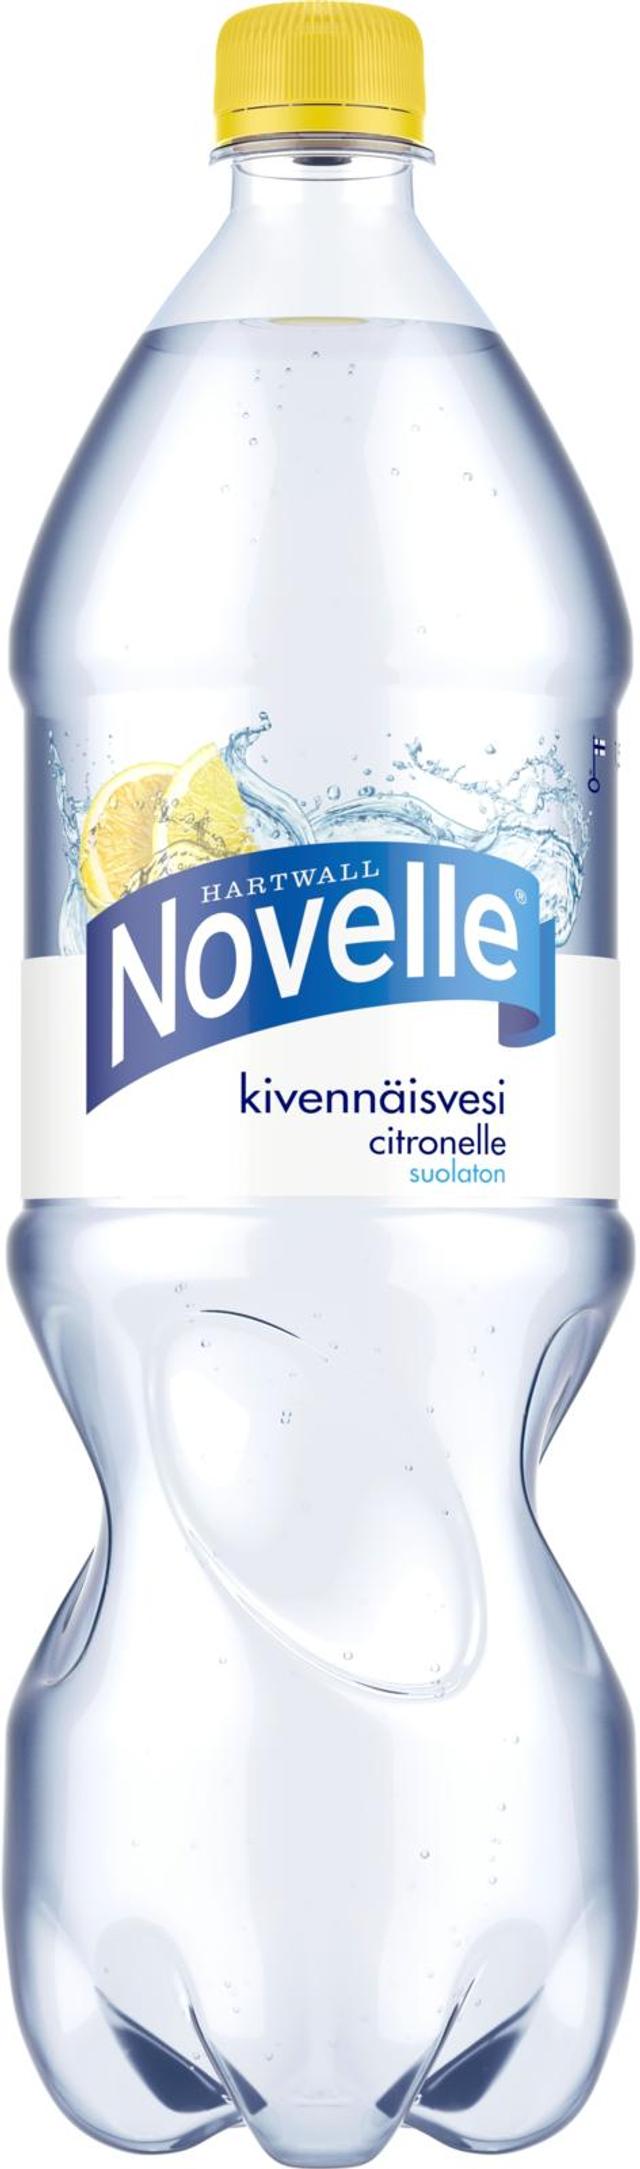 Hartwall Novelle Citronelle kivennäisvesi 1,5 l